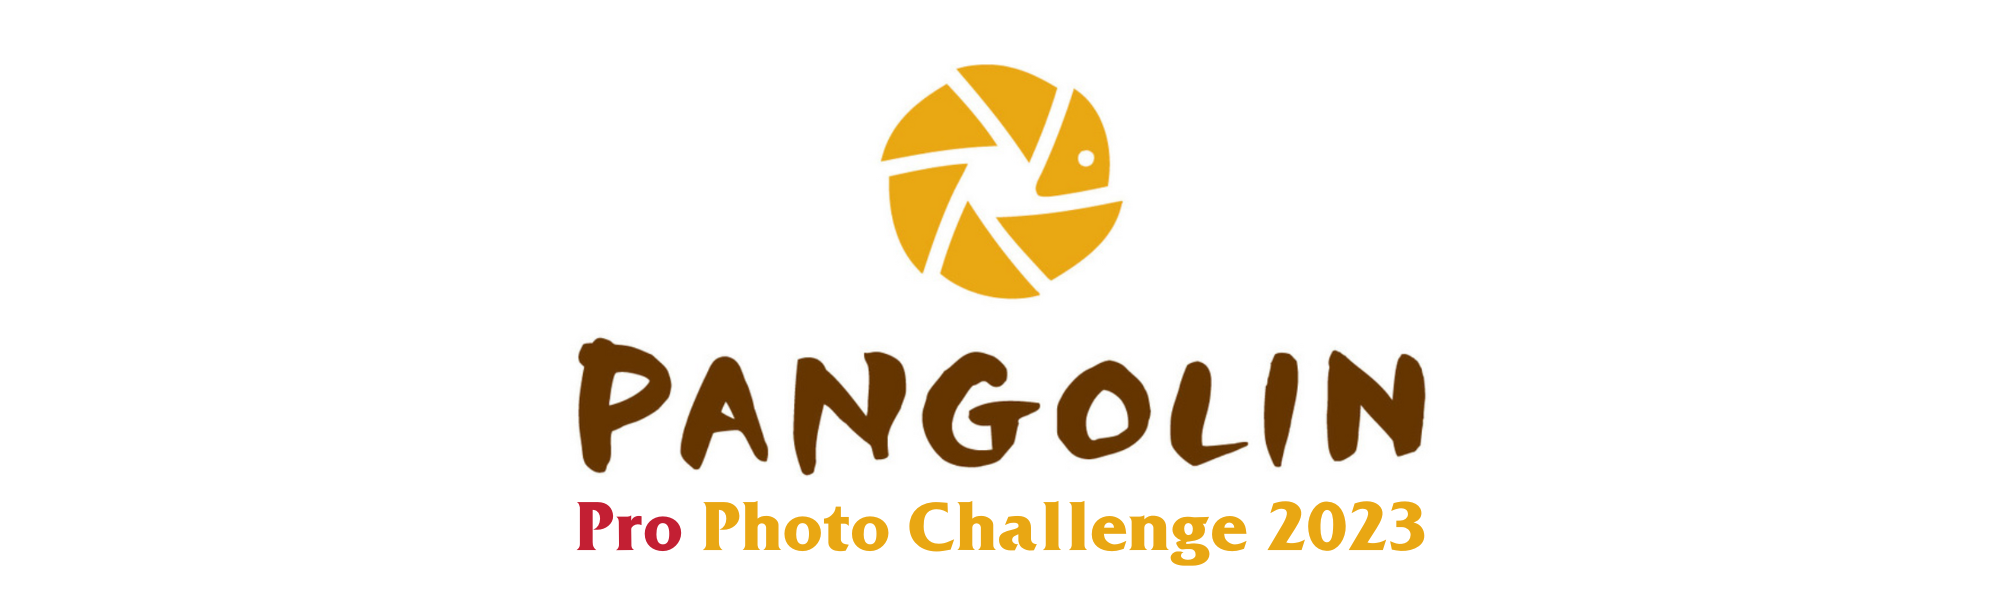 Pangolin Photo Challenge 2021 logo